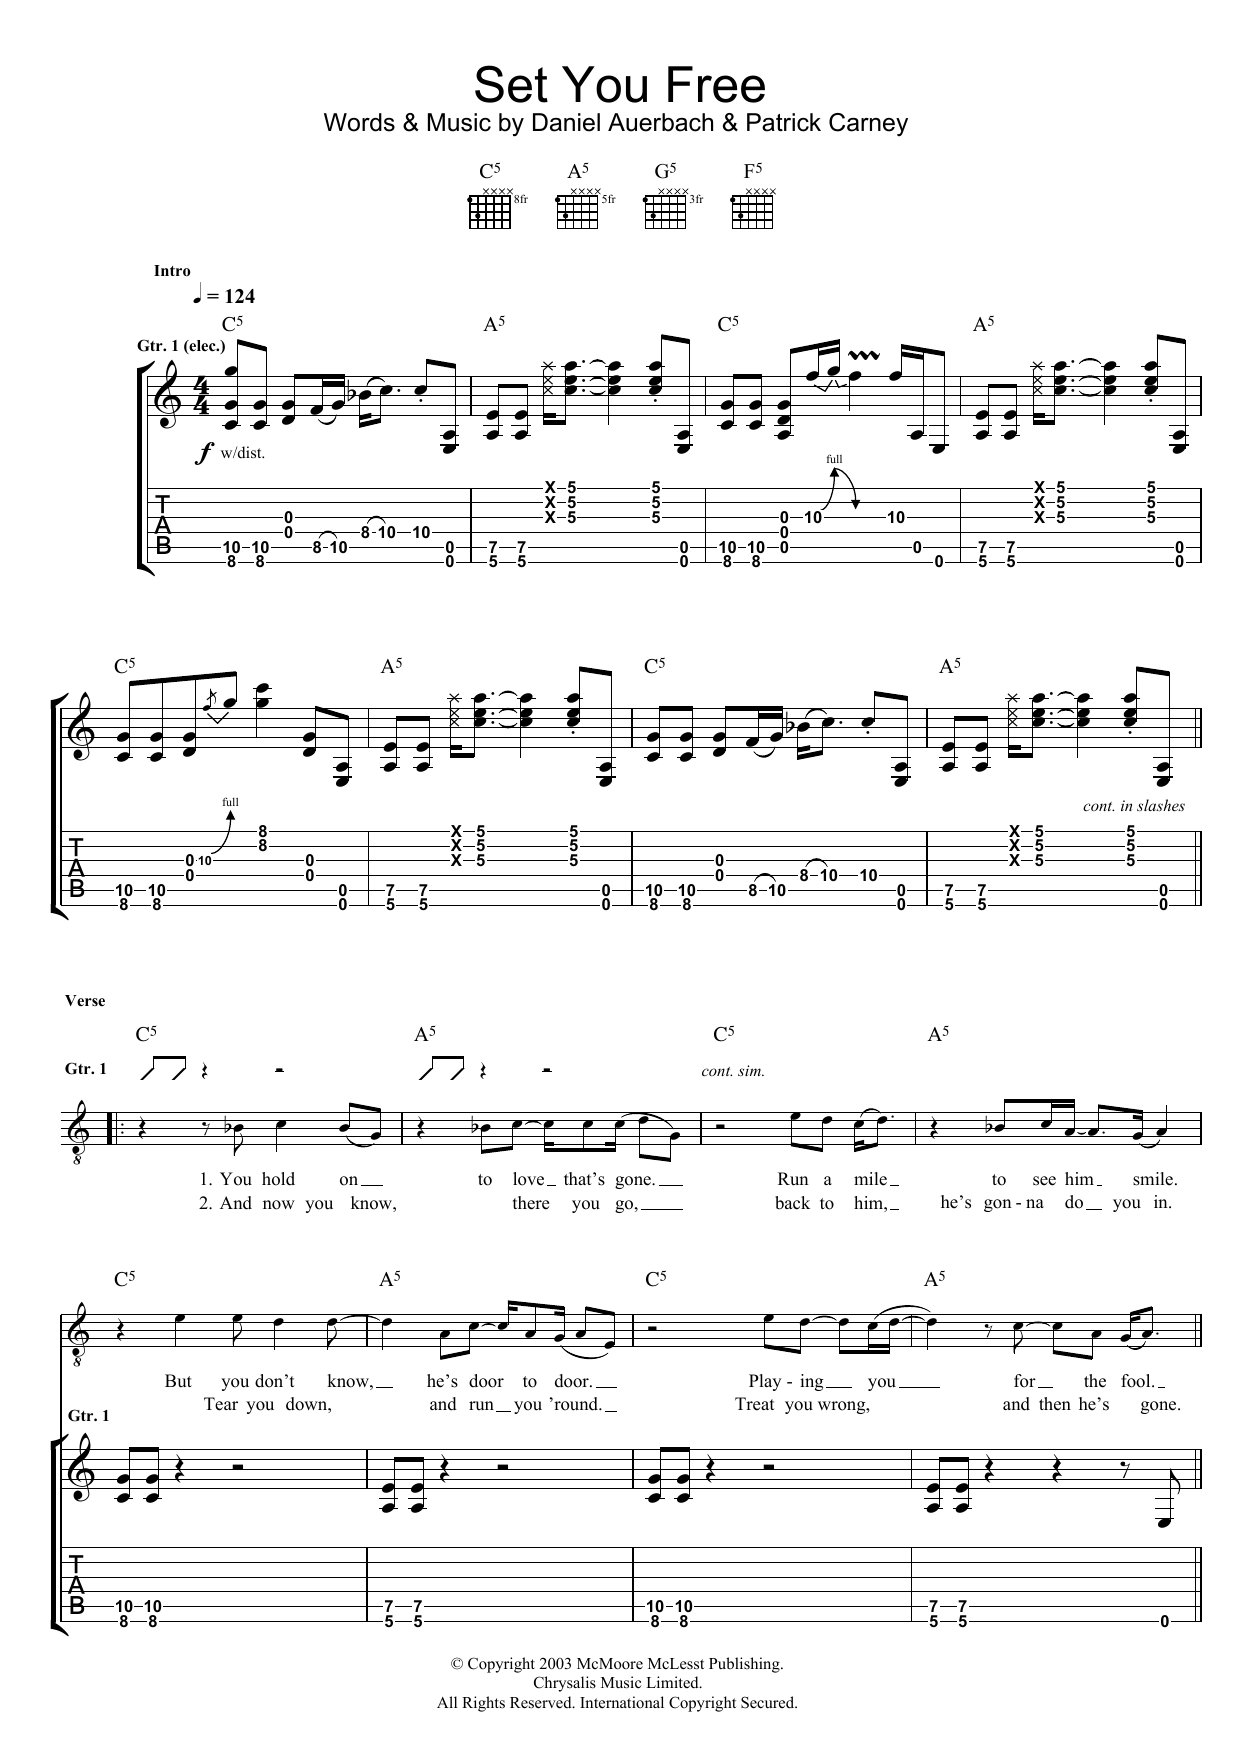 The Black Keys Set You Free sheet music notes and chords arranged for Guitar Chords/Lyrics